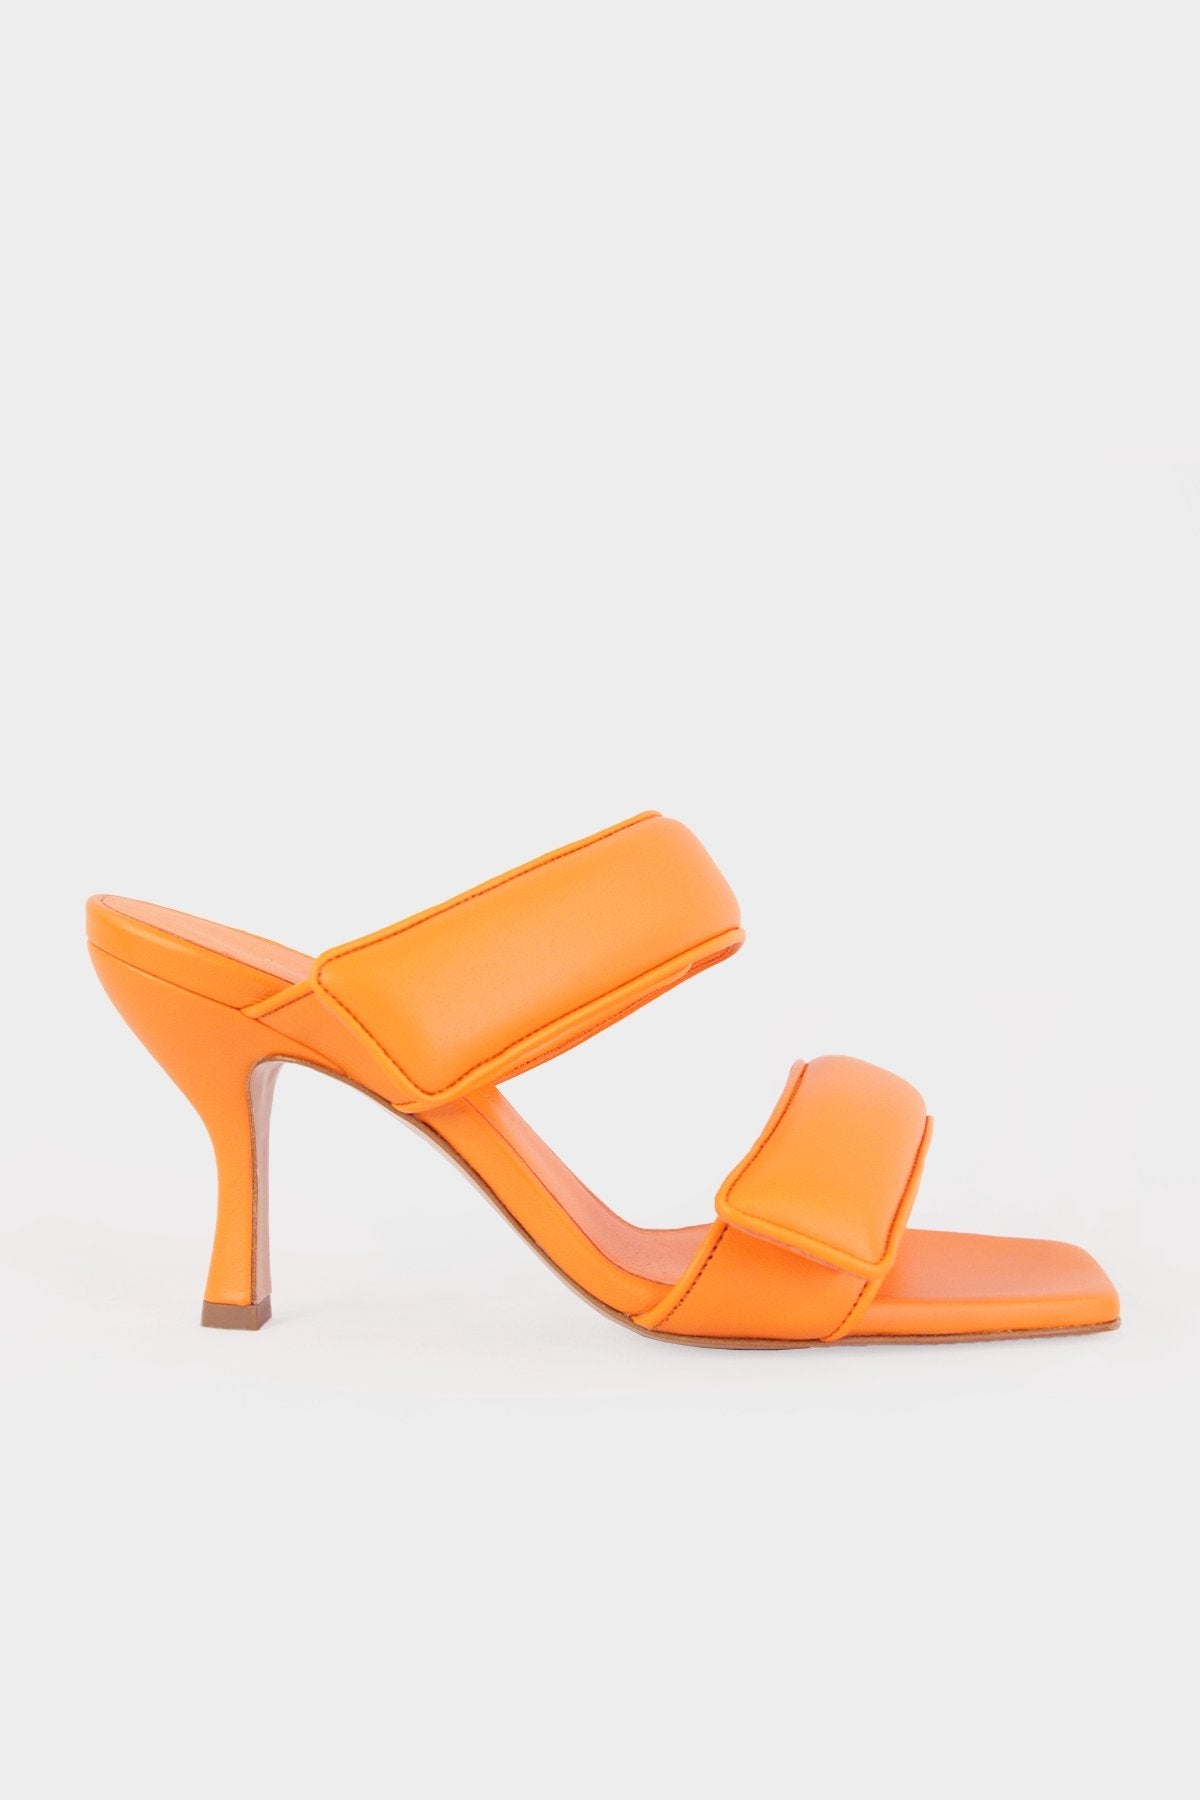 Perni Two Strap Sandal in Flash Orange - shop-olivia.com